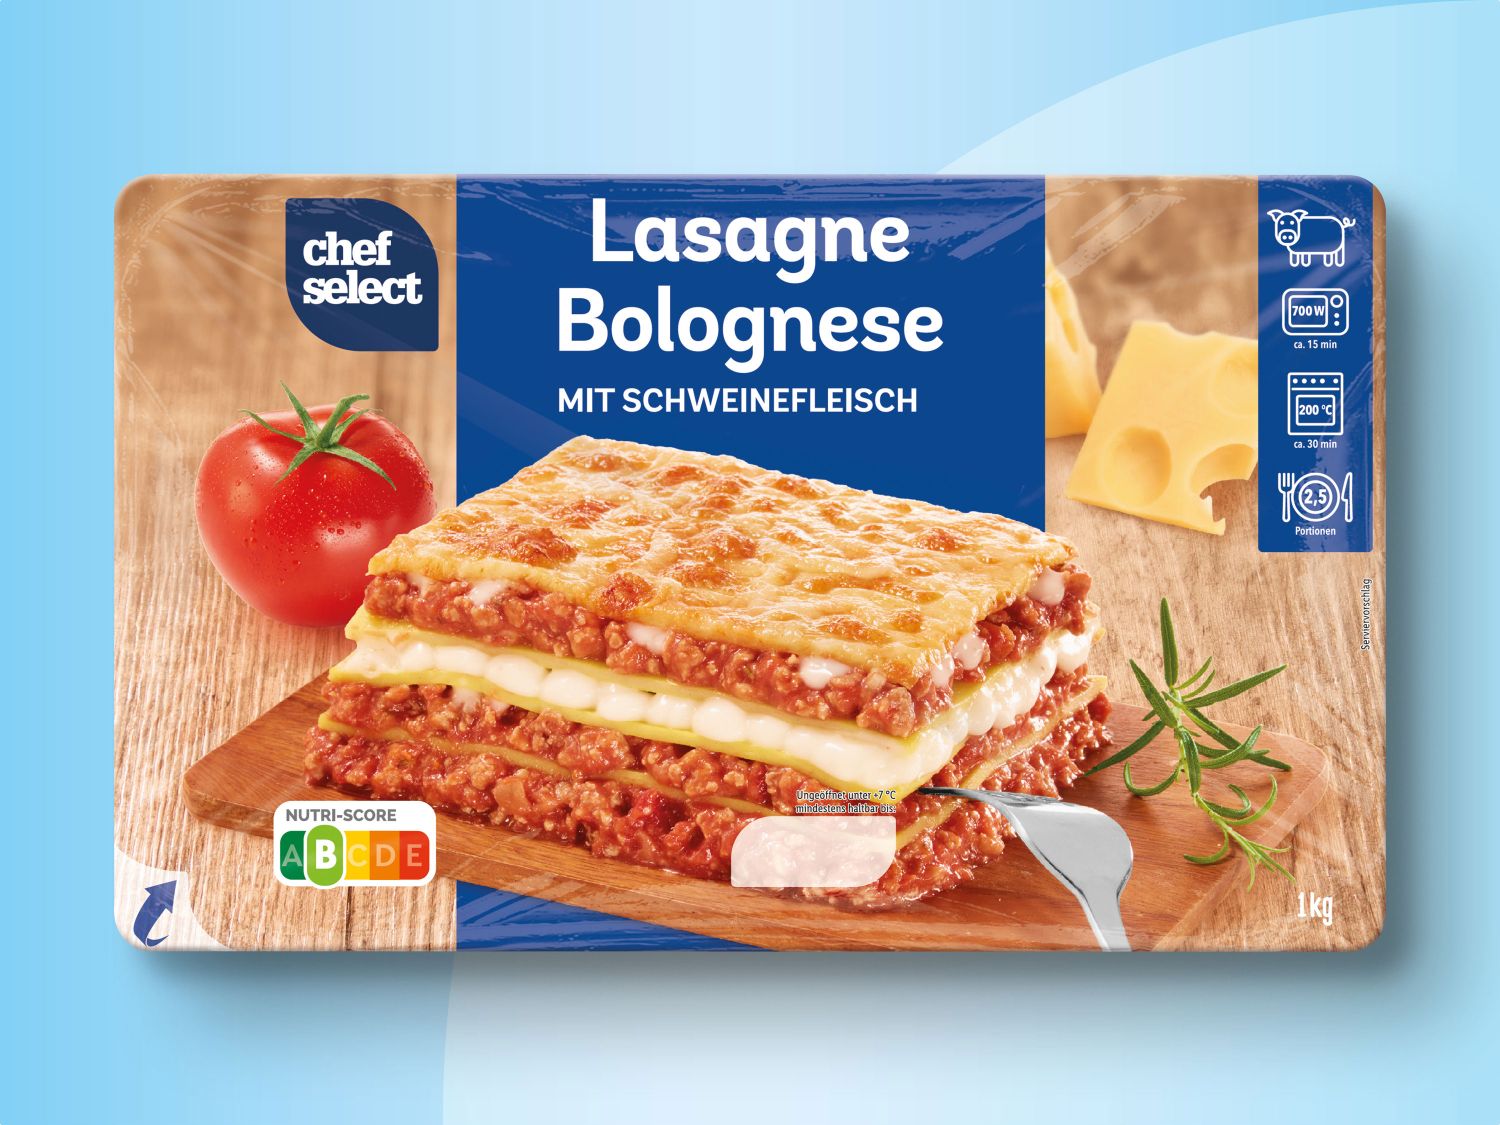 Chef Select - Lasagne Bolognese Deutschland Lidl